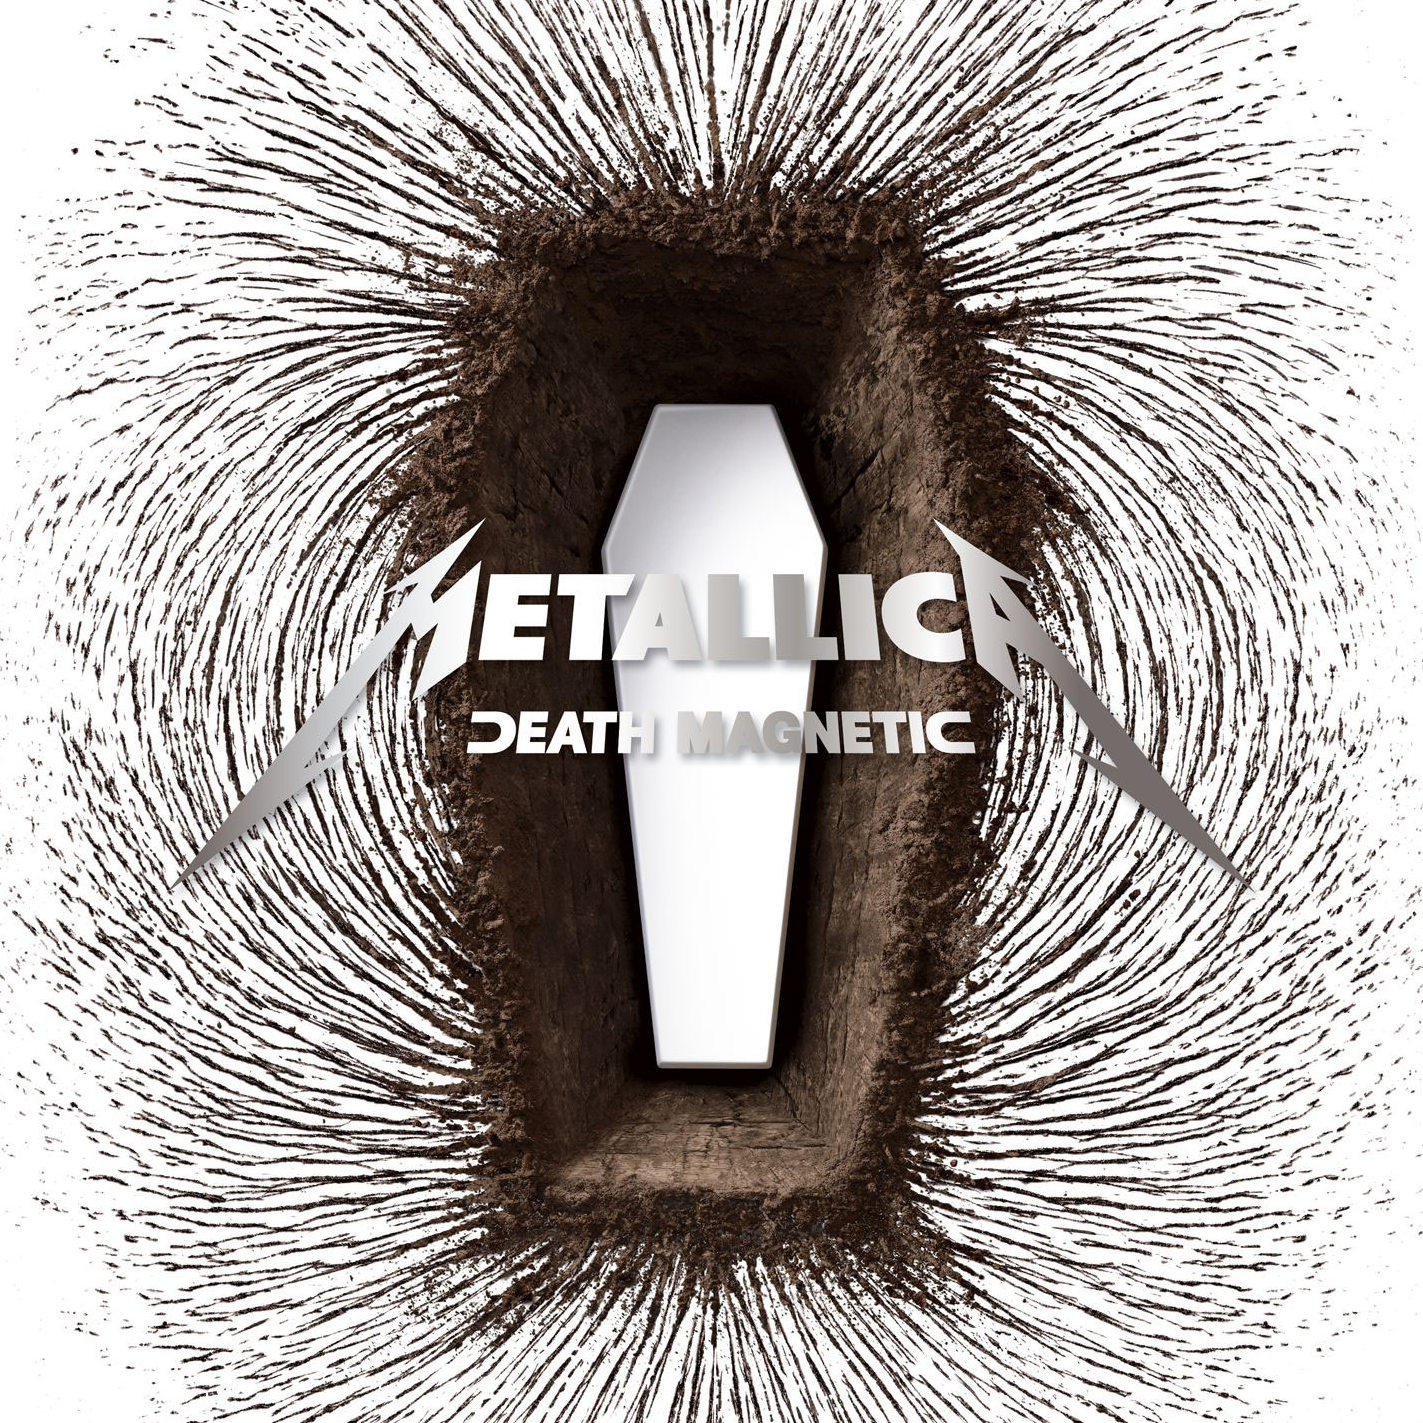 Metallica+-+Death+Magnetic+(2008).jpg